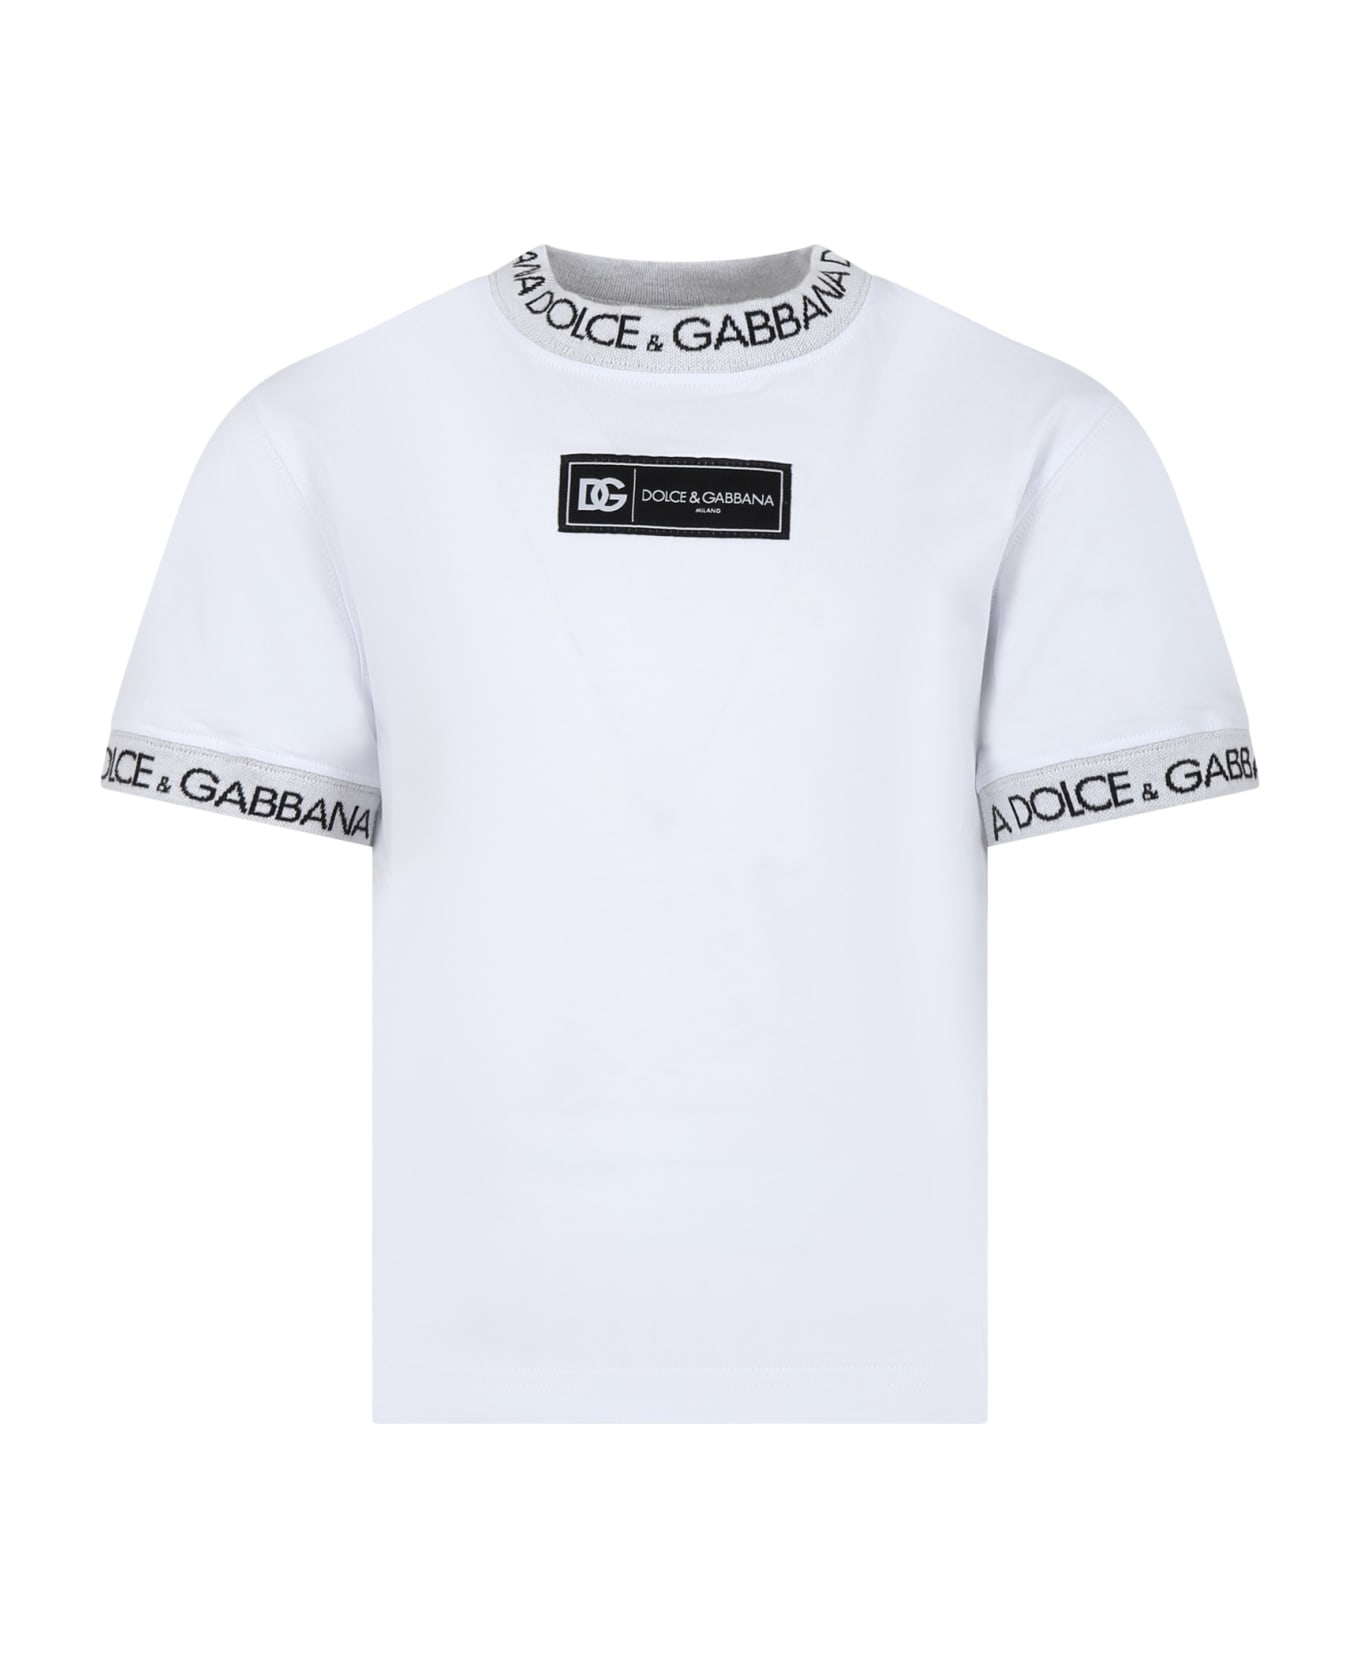 Dolce & Gabbana White T-shirt For Kids With Logo - Bianco Ottico